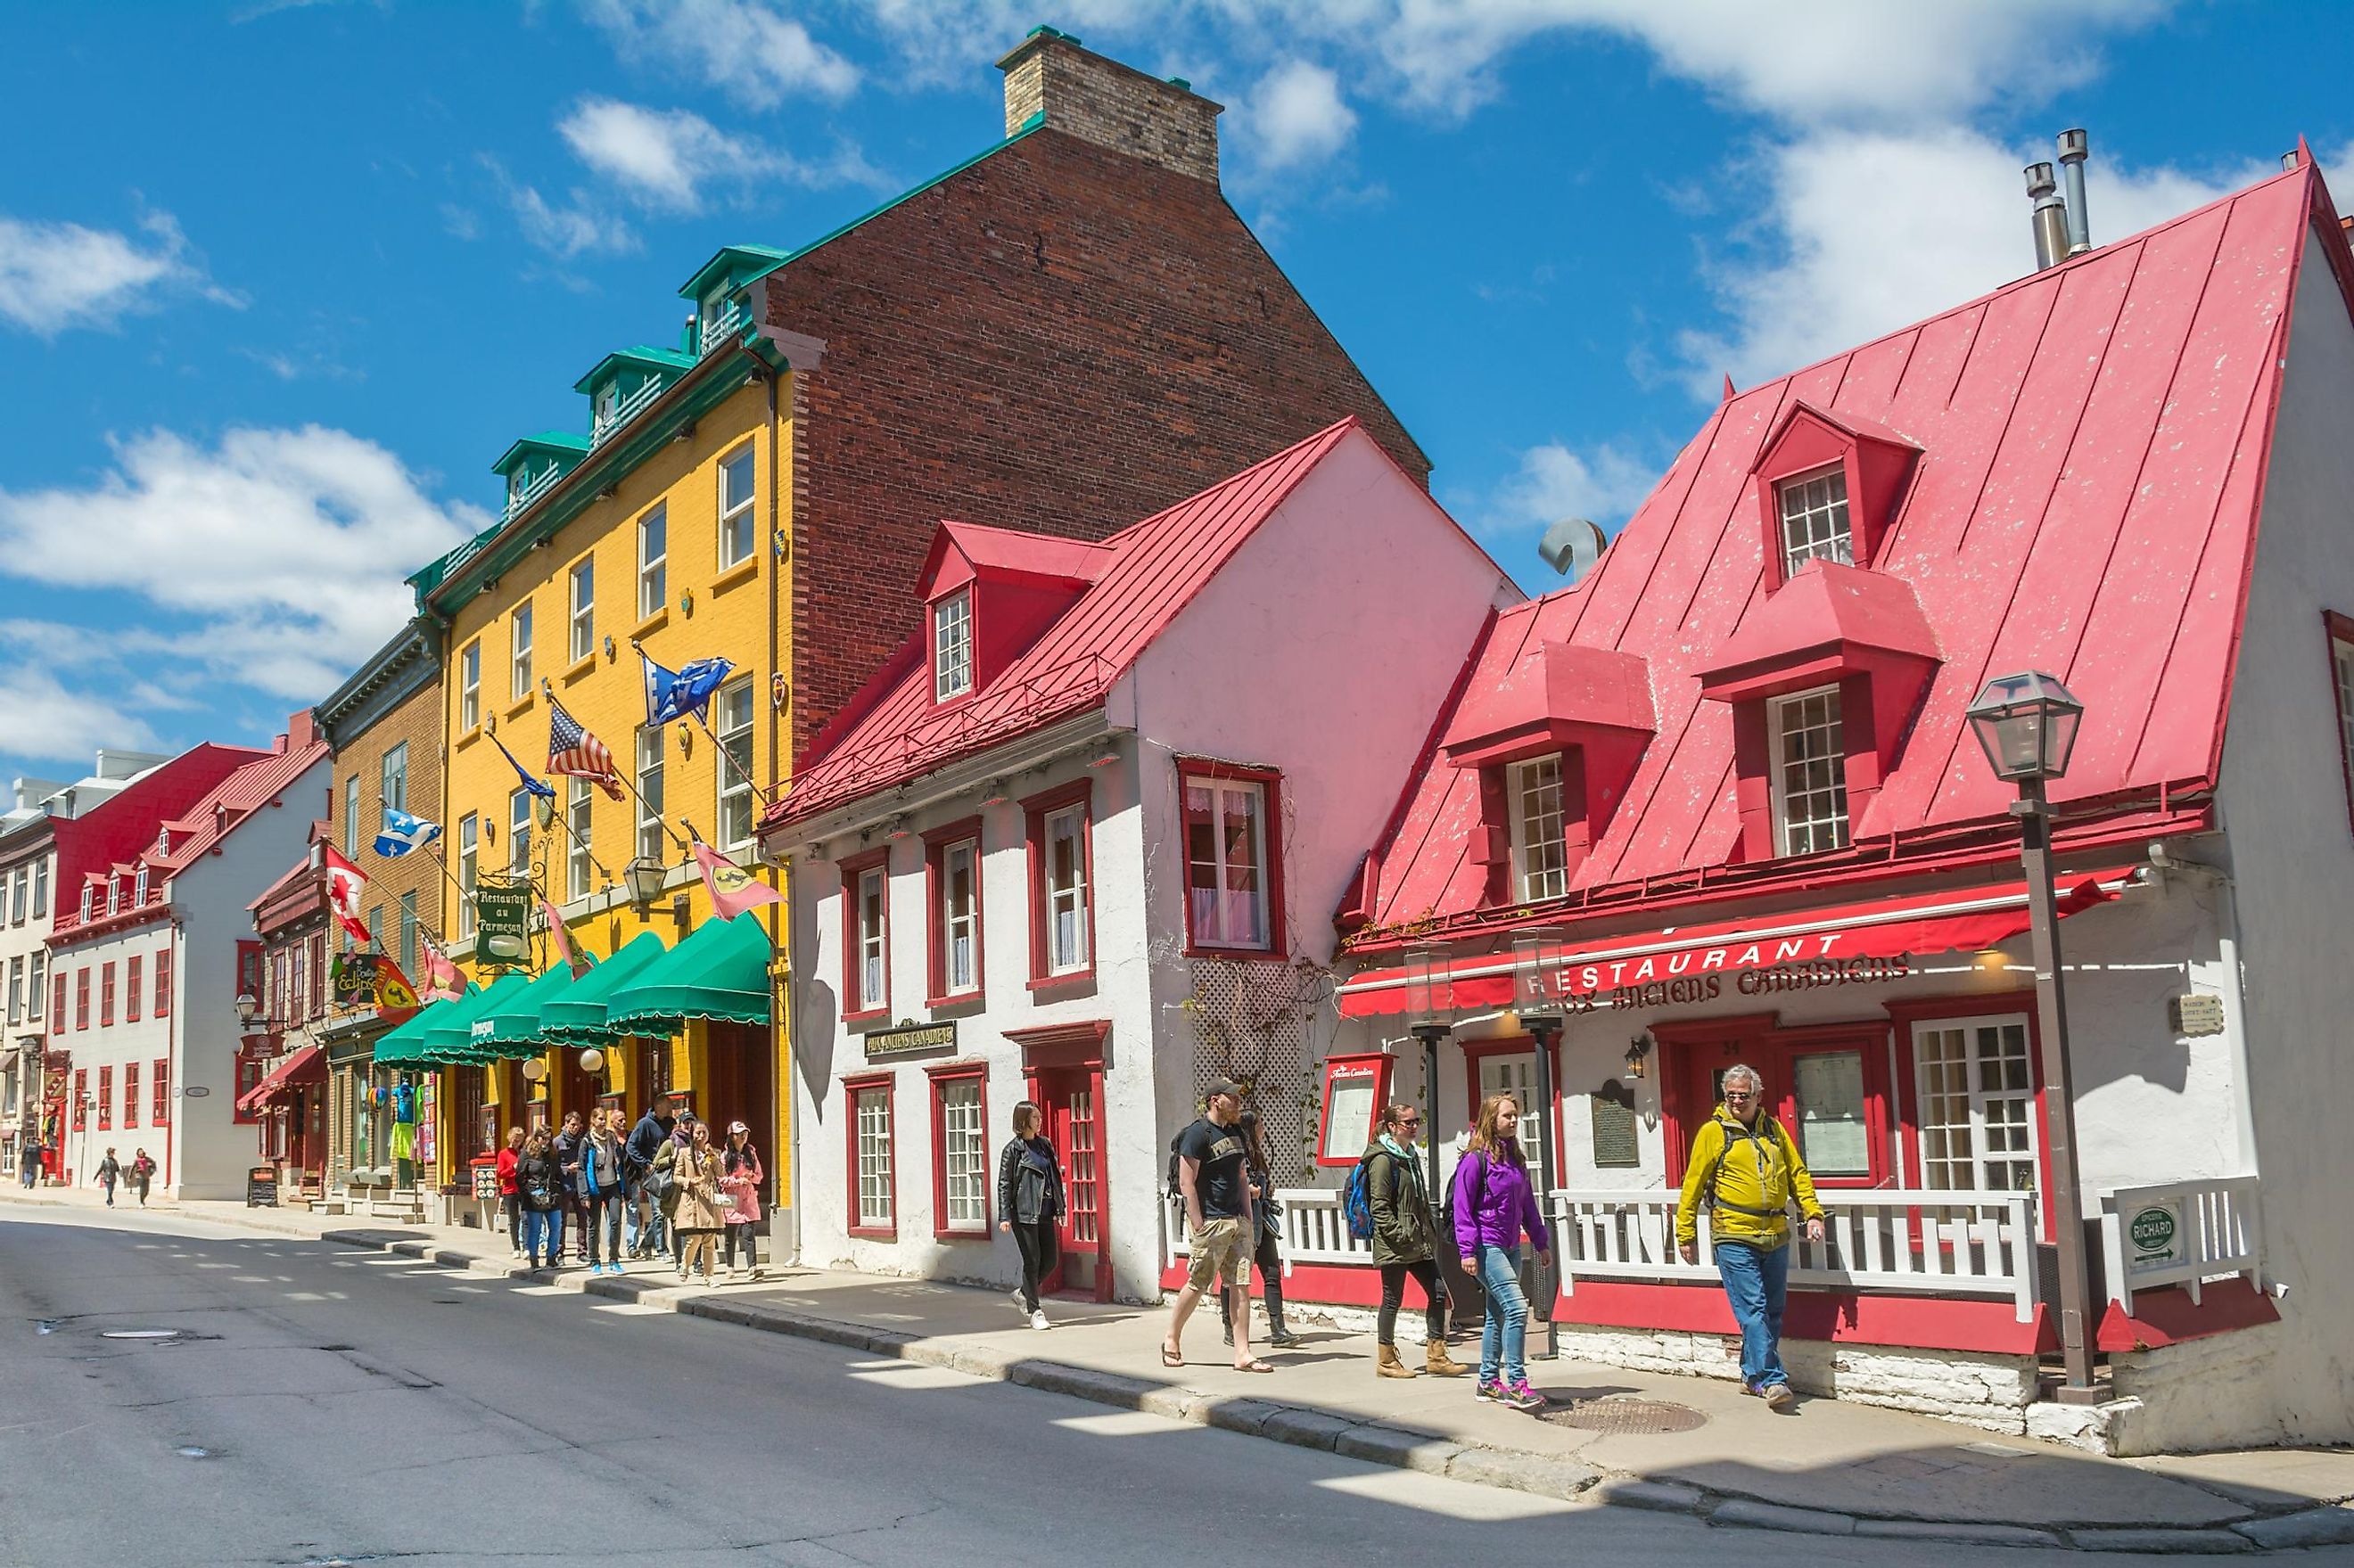 Louis Street, Quebec City, Canada. Image credit: Pri Ma/Shutterstock